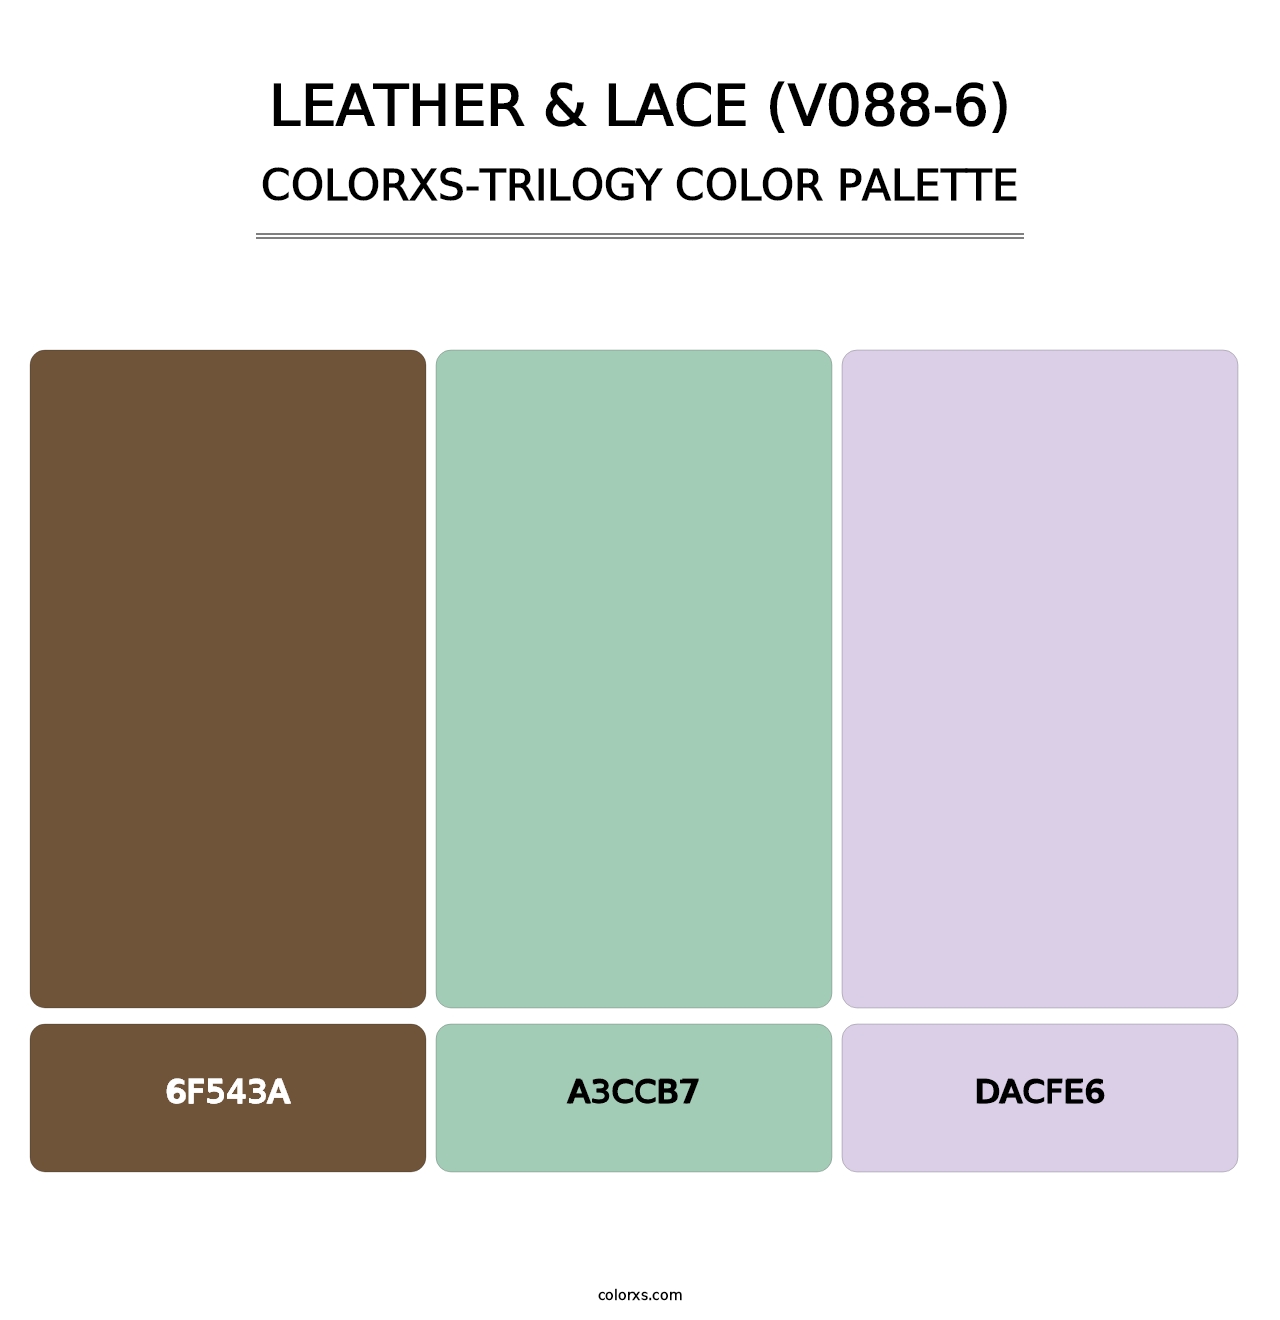 Leather & Lace (V088-6) - Colorxs Trilogy Palette